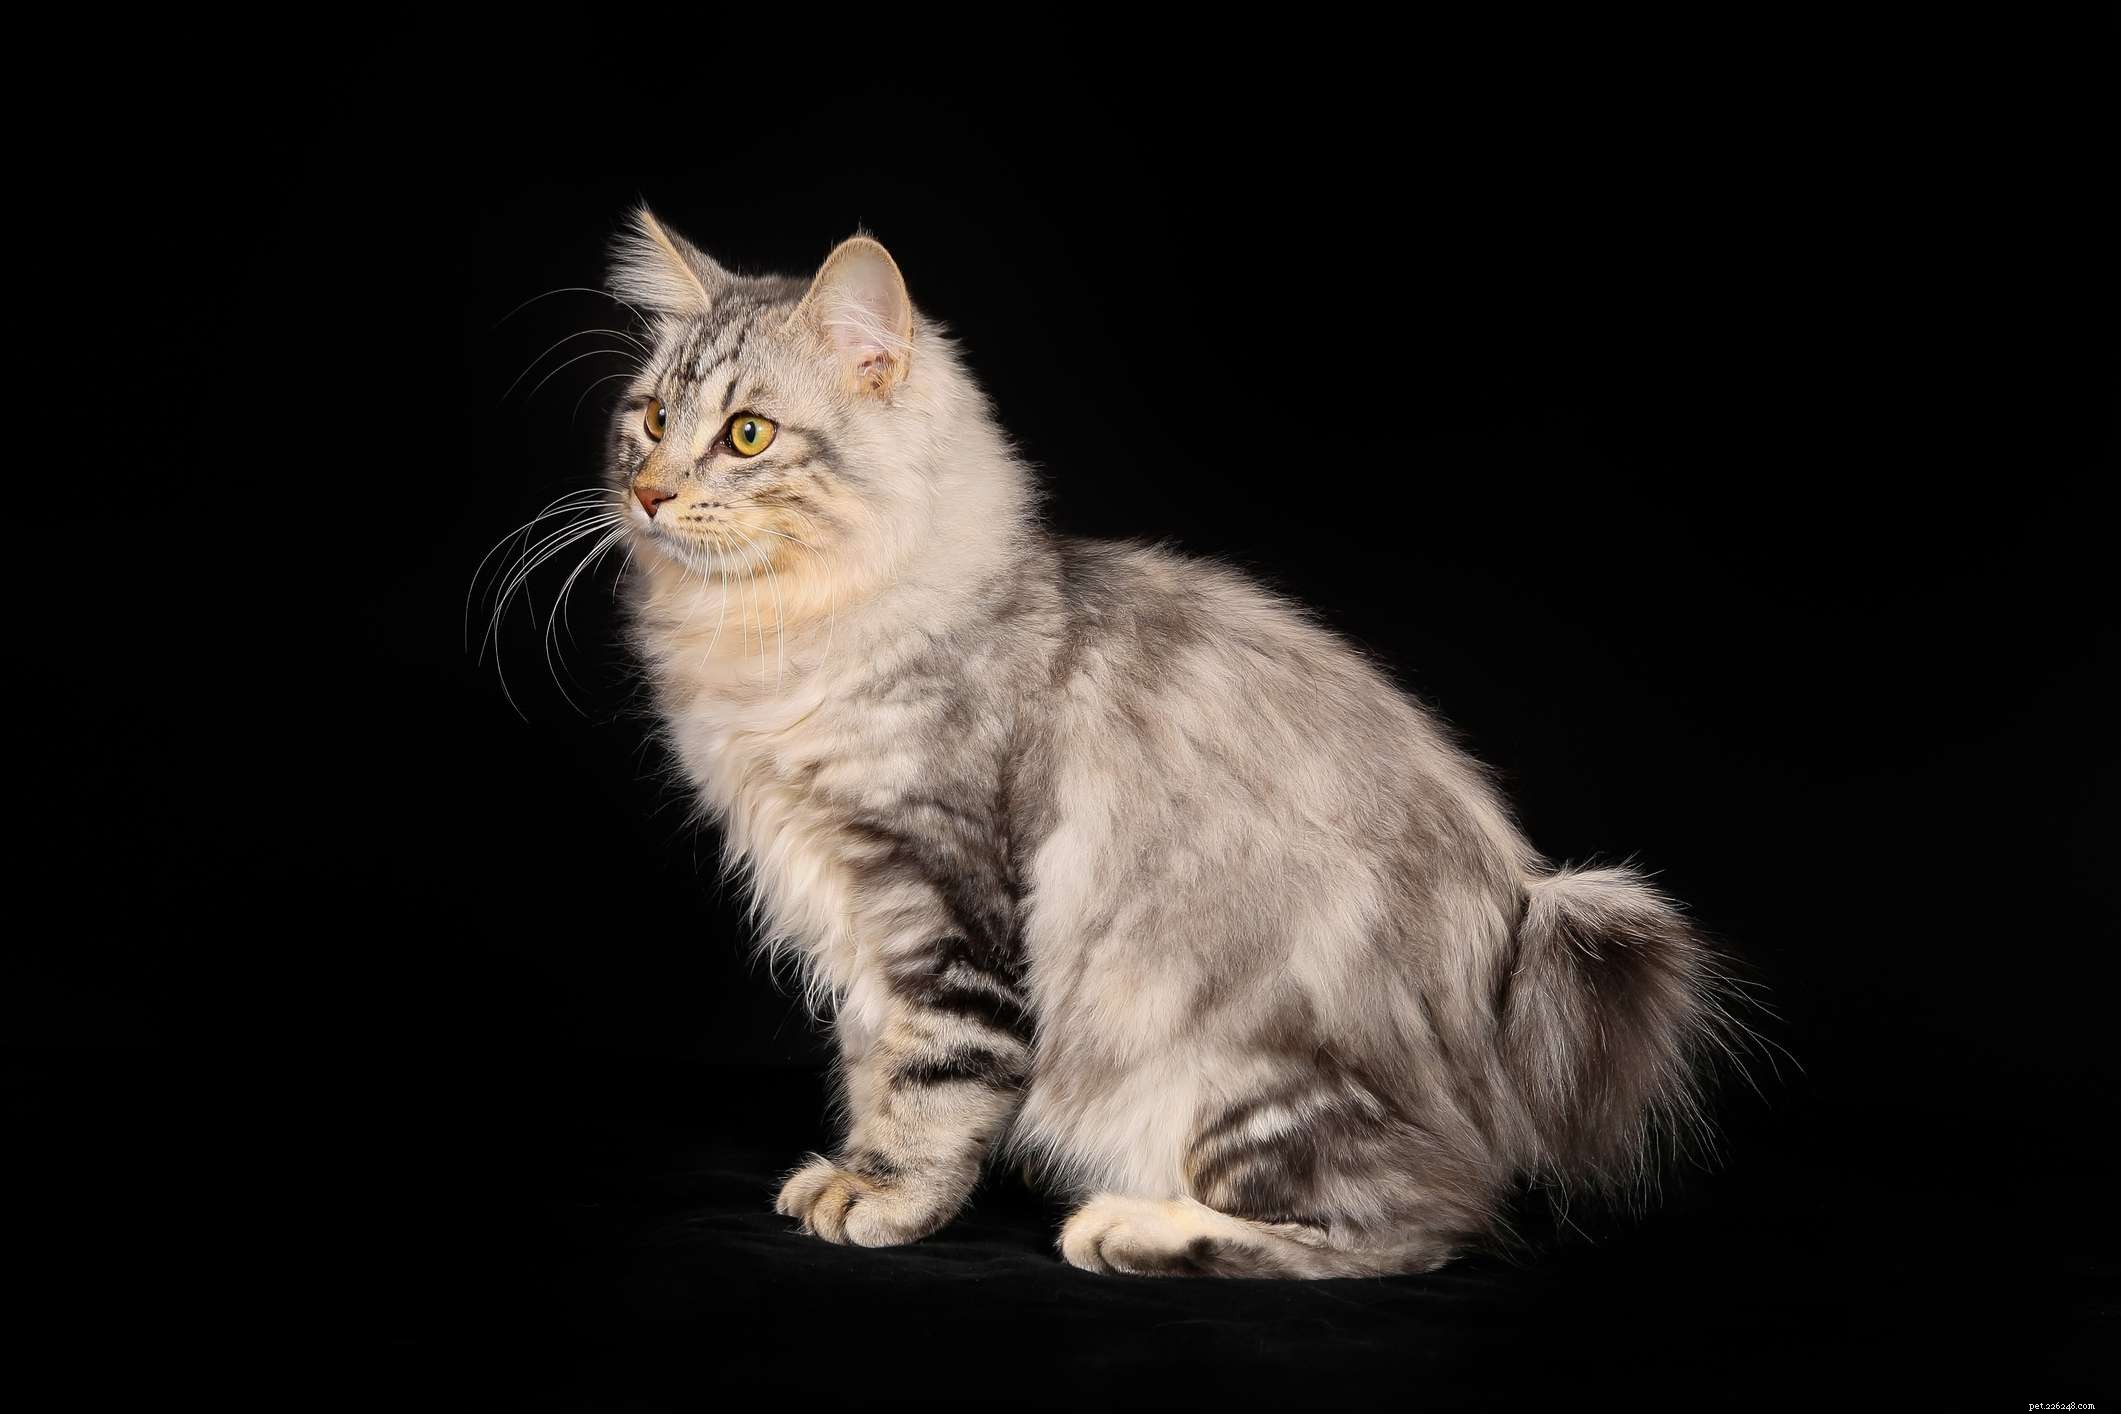 Kurilian Bobtail:profilo della razza felina